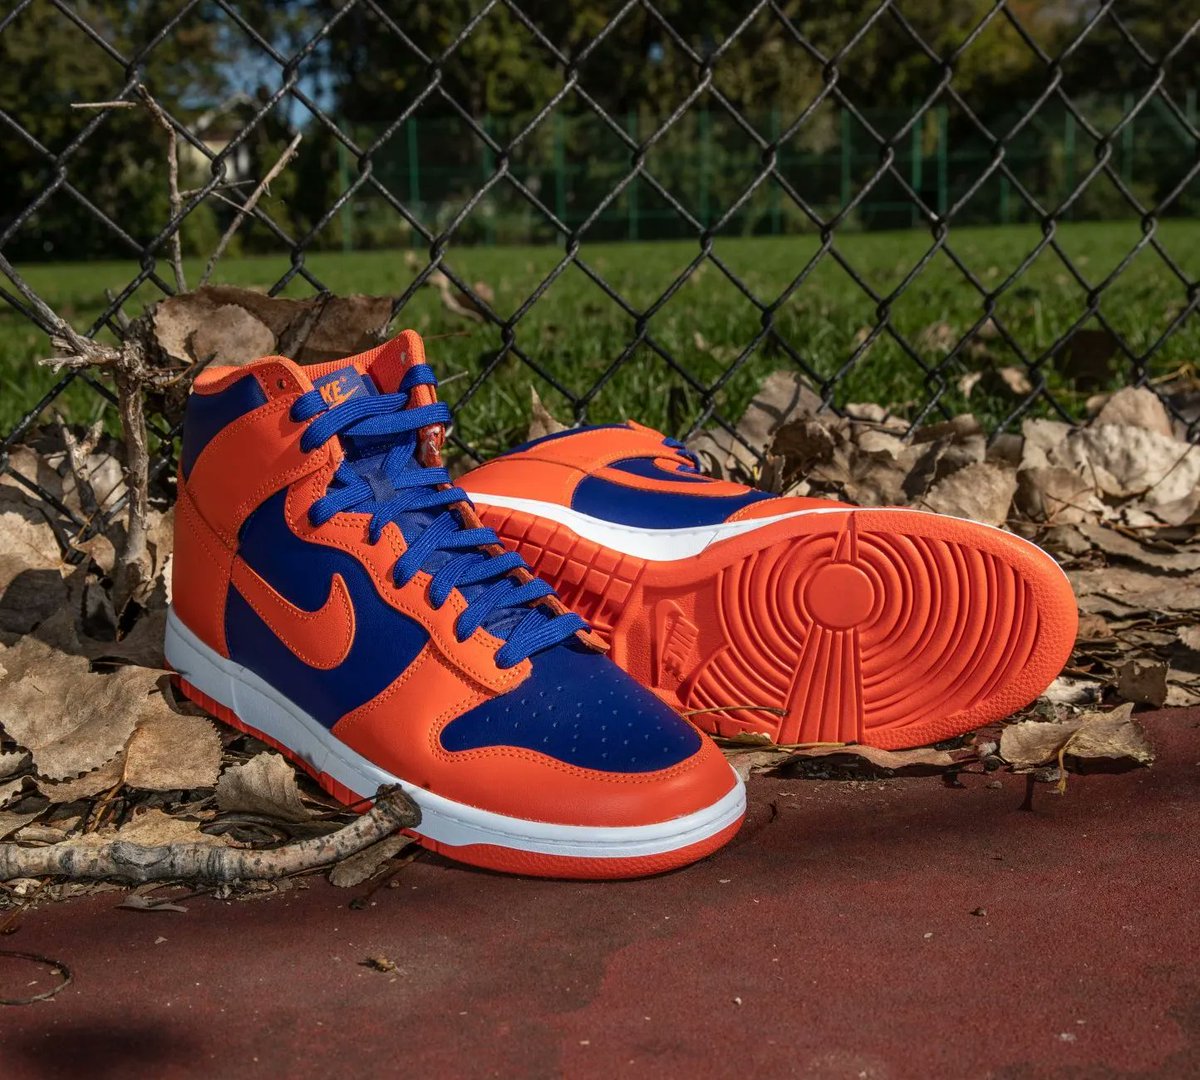 Restocked via SNS Nike Dunk High 'Knicks' => bit.ly/3CcjbAk